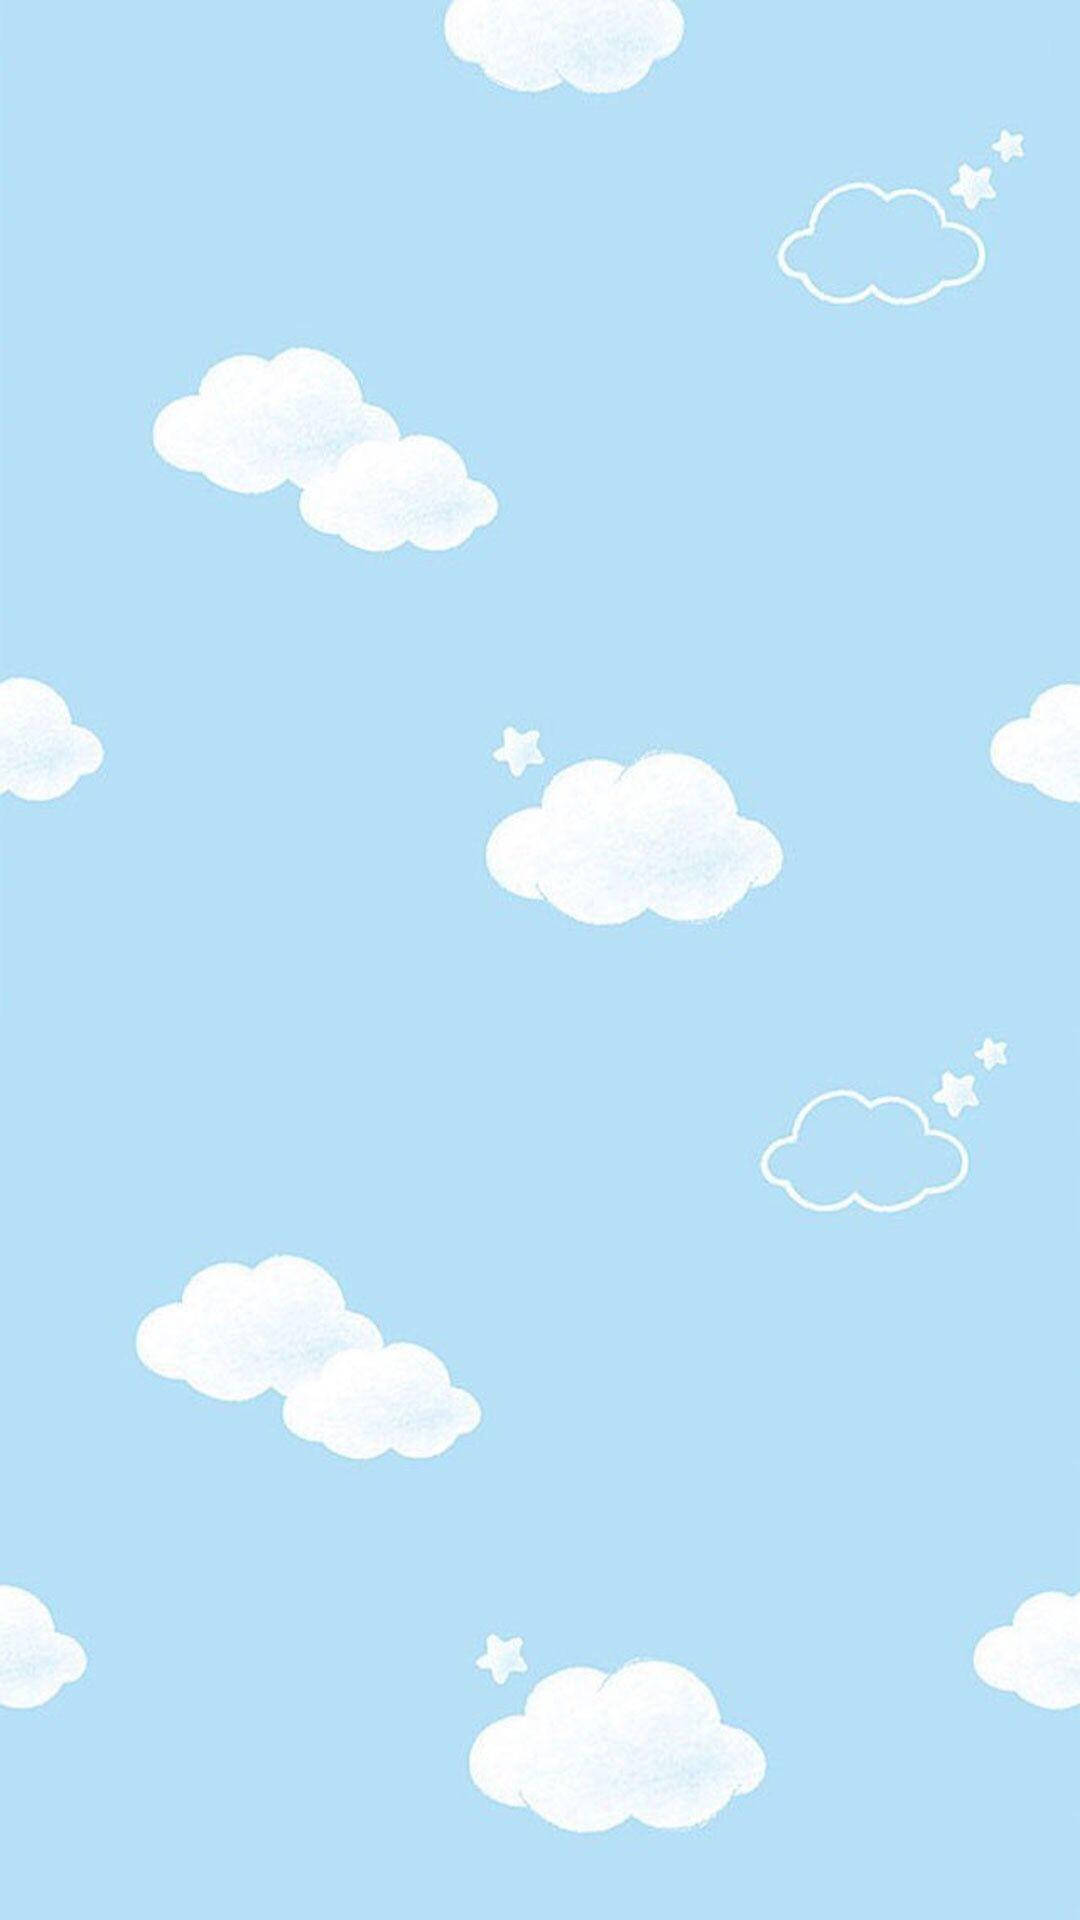 Download Aesthetic Blue Cloud Drawings Wallpaper